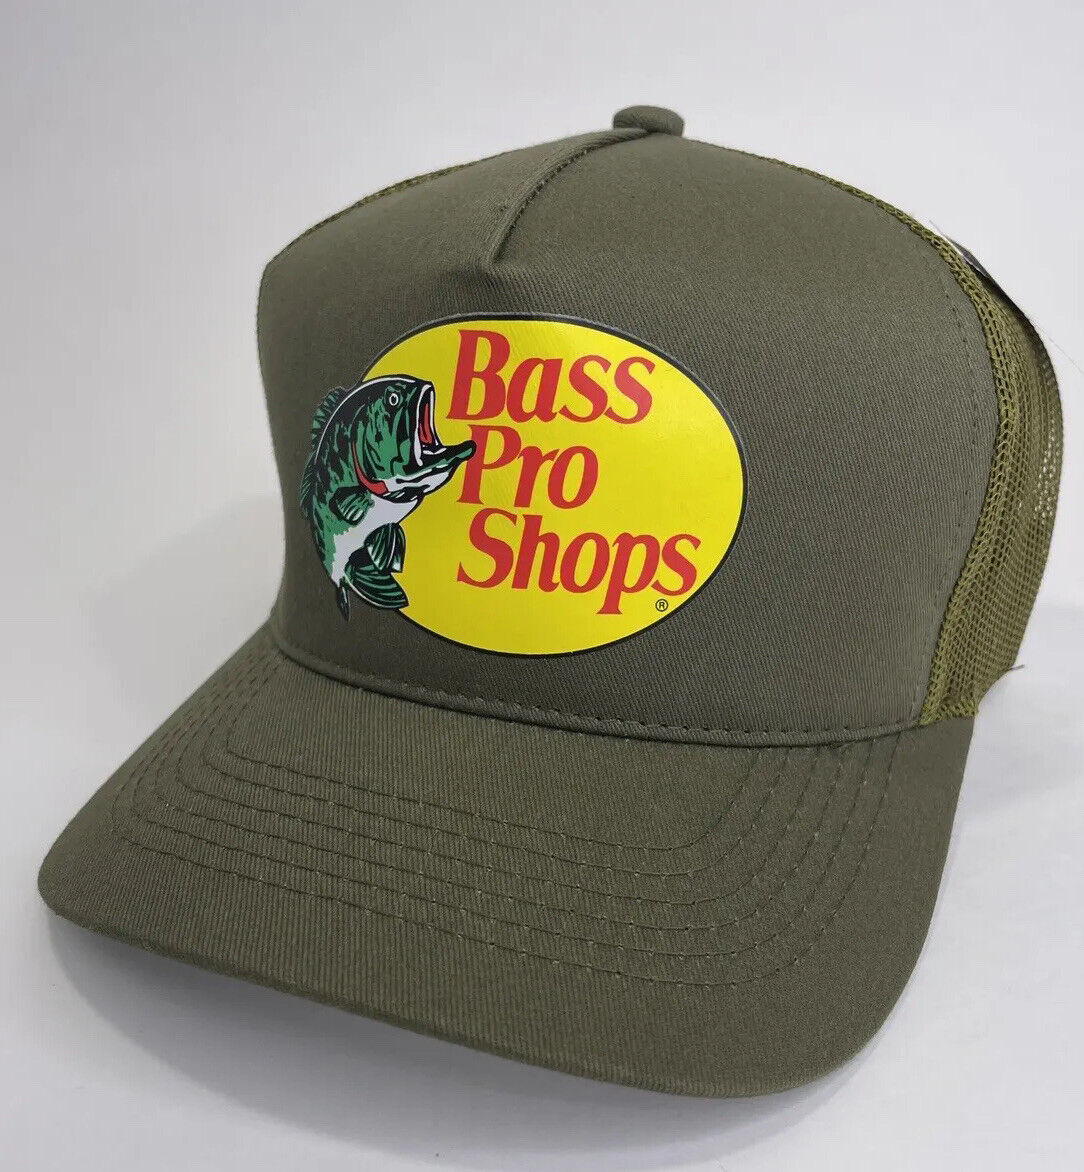 Bass Pro Shops Fishing Hunting Men's Army Green Mesh Trucker Hat